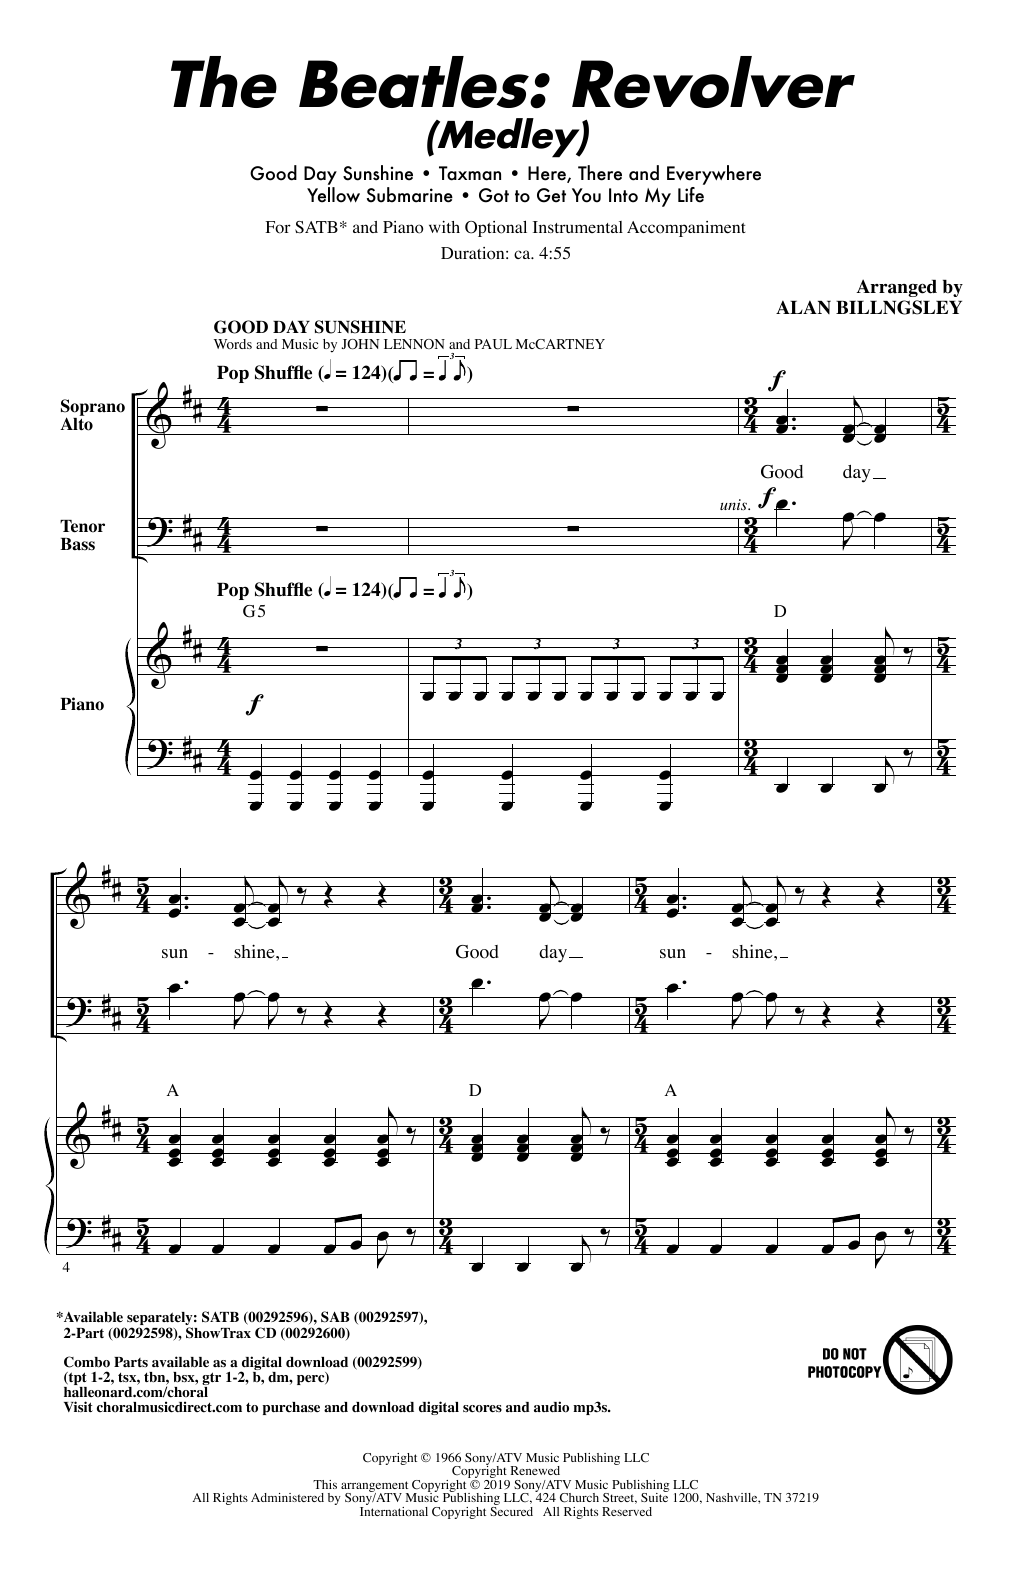 The Beatles The Beatles: Revolver (Medley) (arr. Alan Billingsley) Sheet Music Notes & Chords for SAB Choir - Download or Print PDF